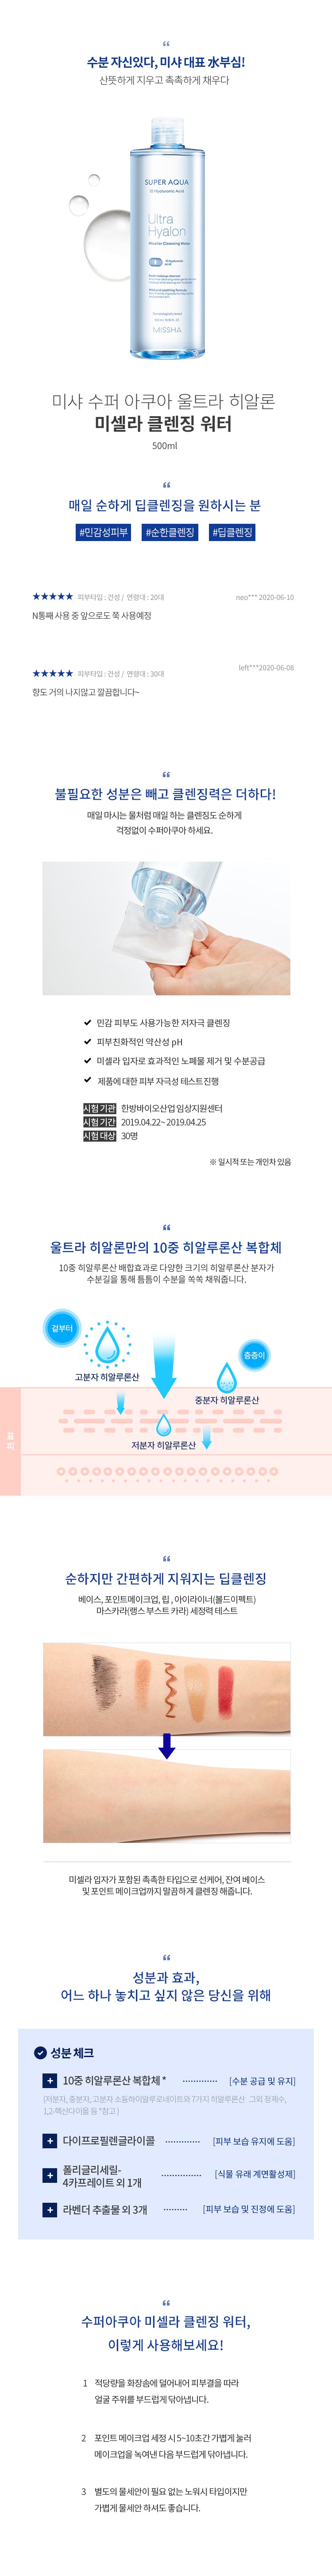 Missha_Super Aqua Ultra Hyalon Micellar Cleansing Water 500ml_1